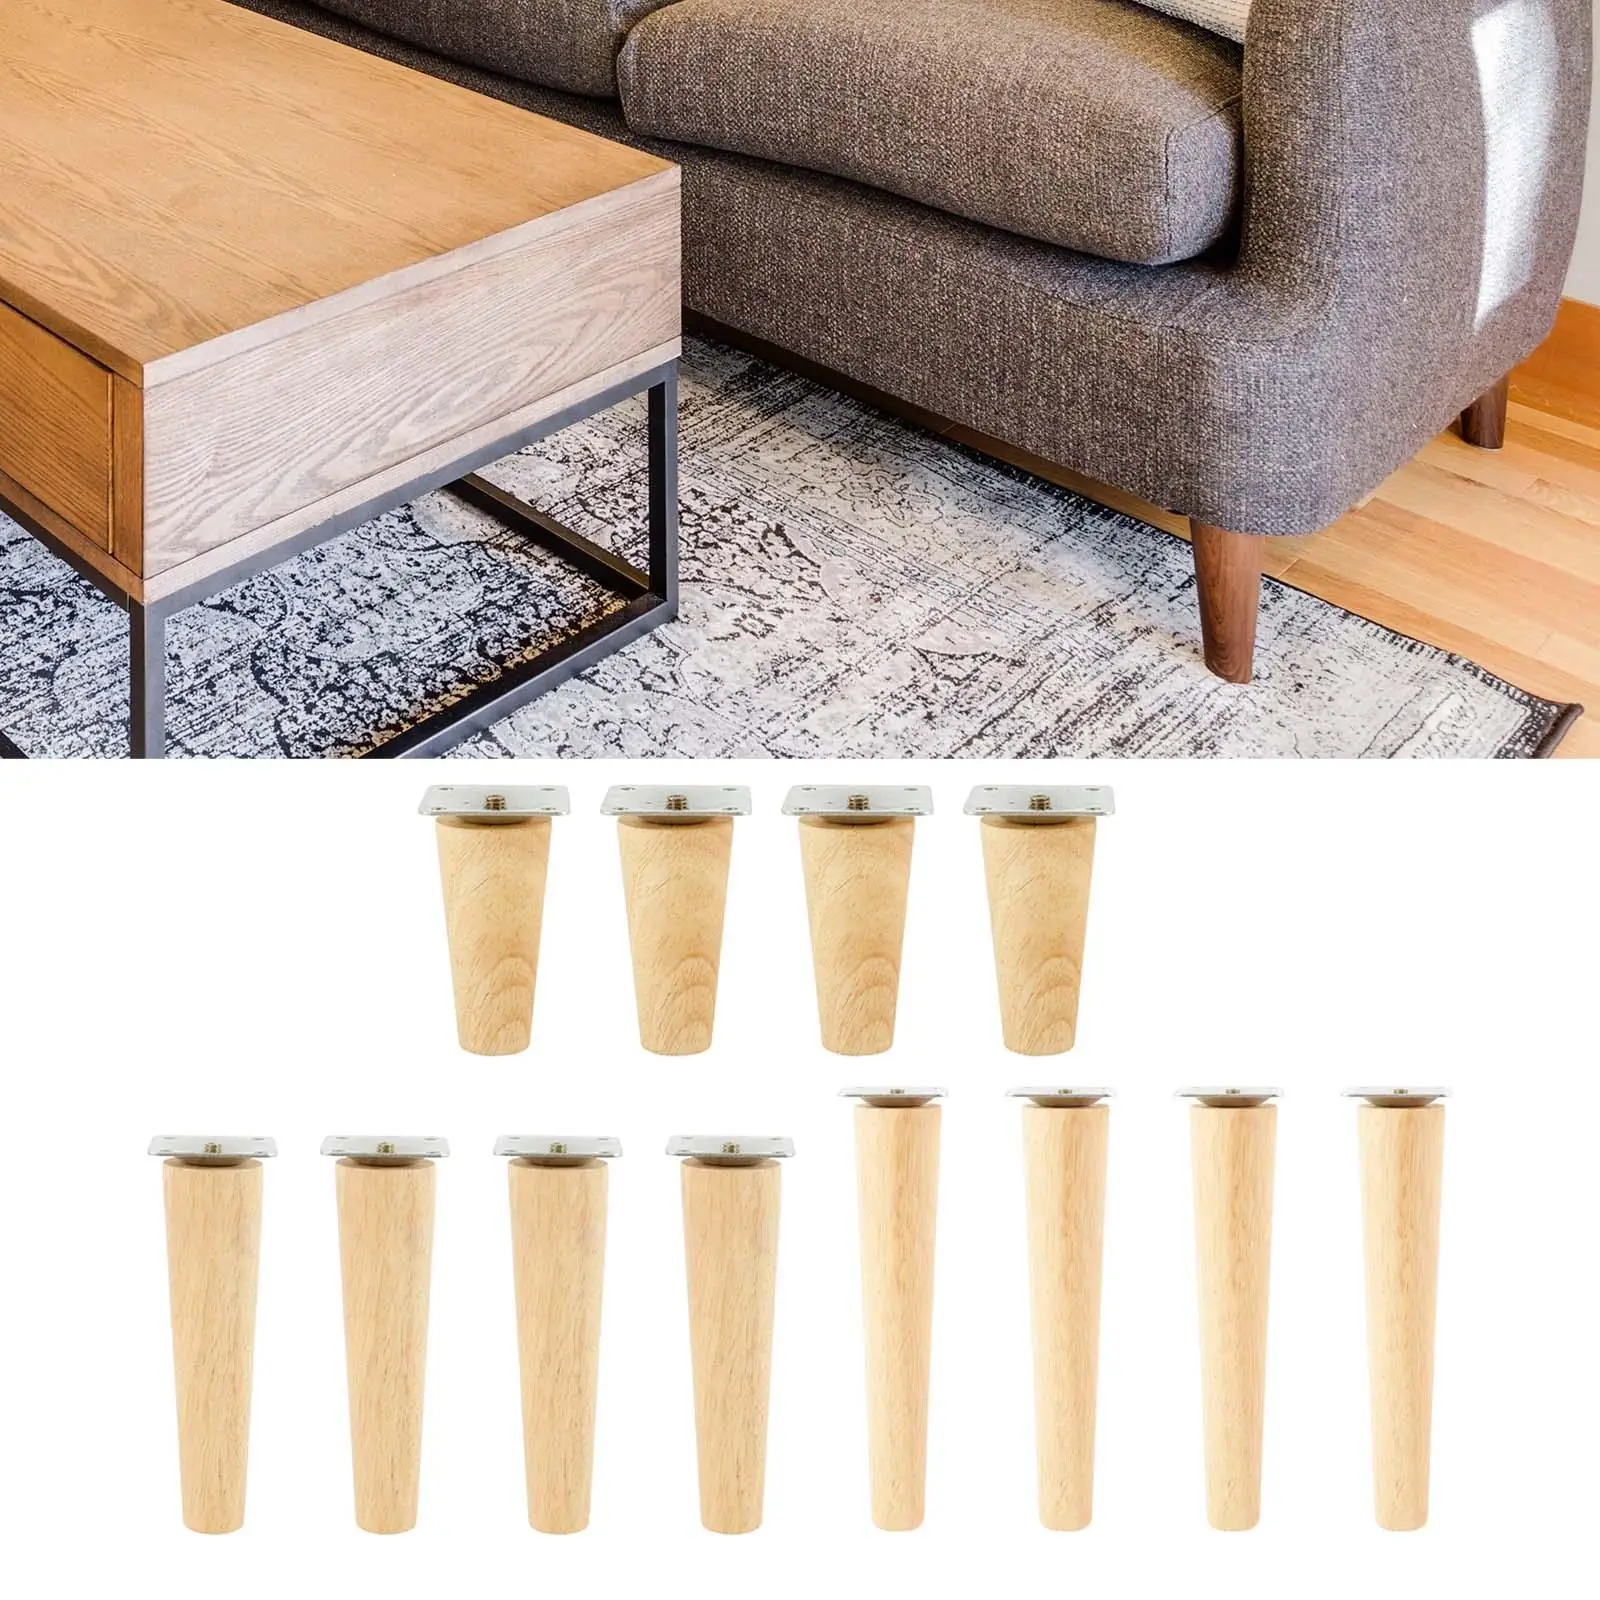 4 Pieces Wooden Furniture Leg Stable Chair Legs Furniture Legs Fashion Sofa Legs DIY for Cupboard Couch Wardrobe Chair Shelves